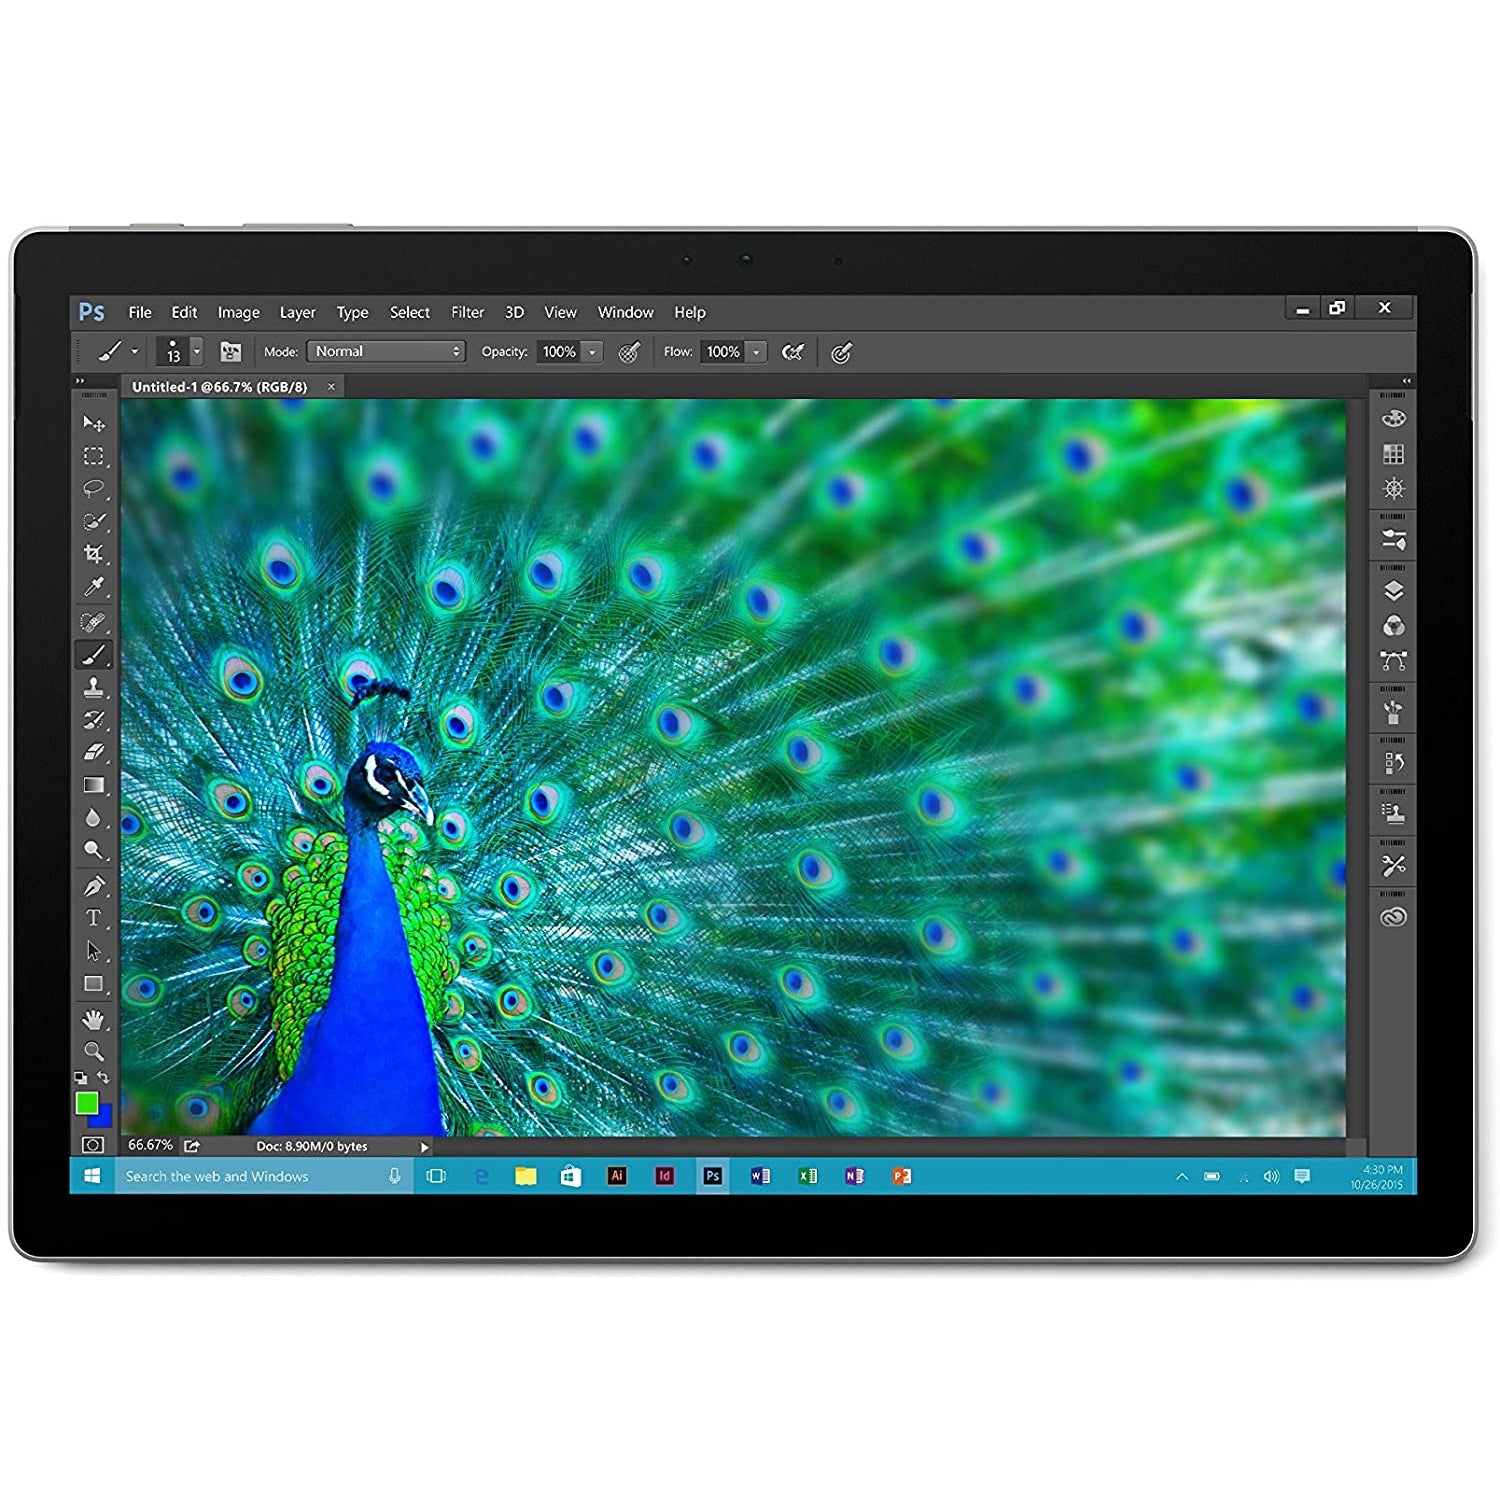 Microsoft Surface Book 13.5", Intel Core i7, 8GB RAM, 256GB, Win 10 - Silver